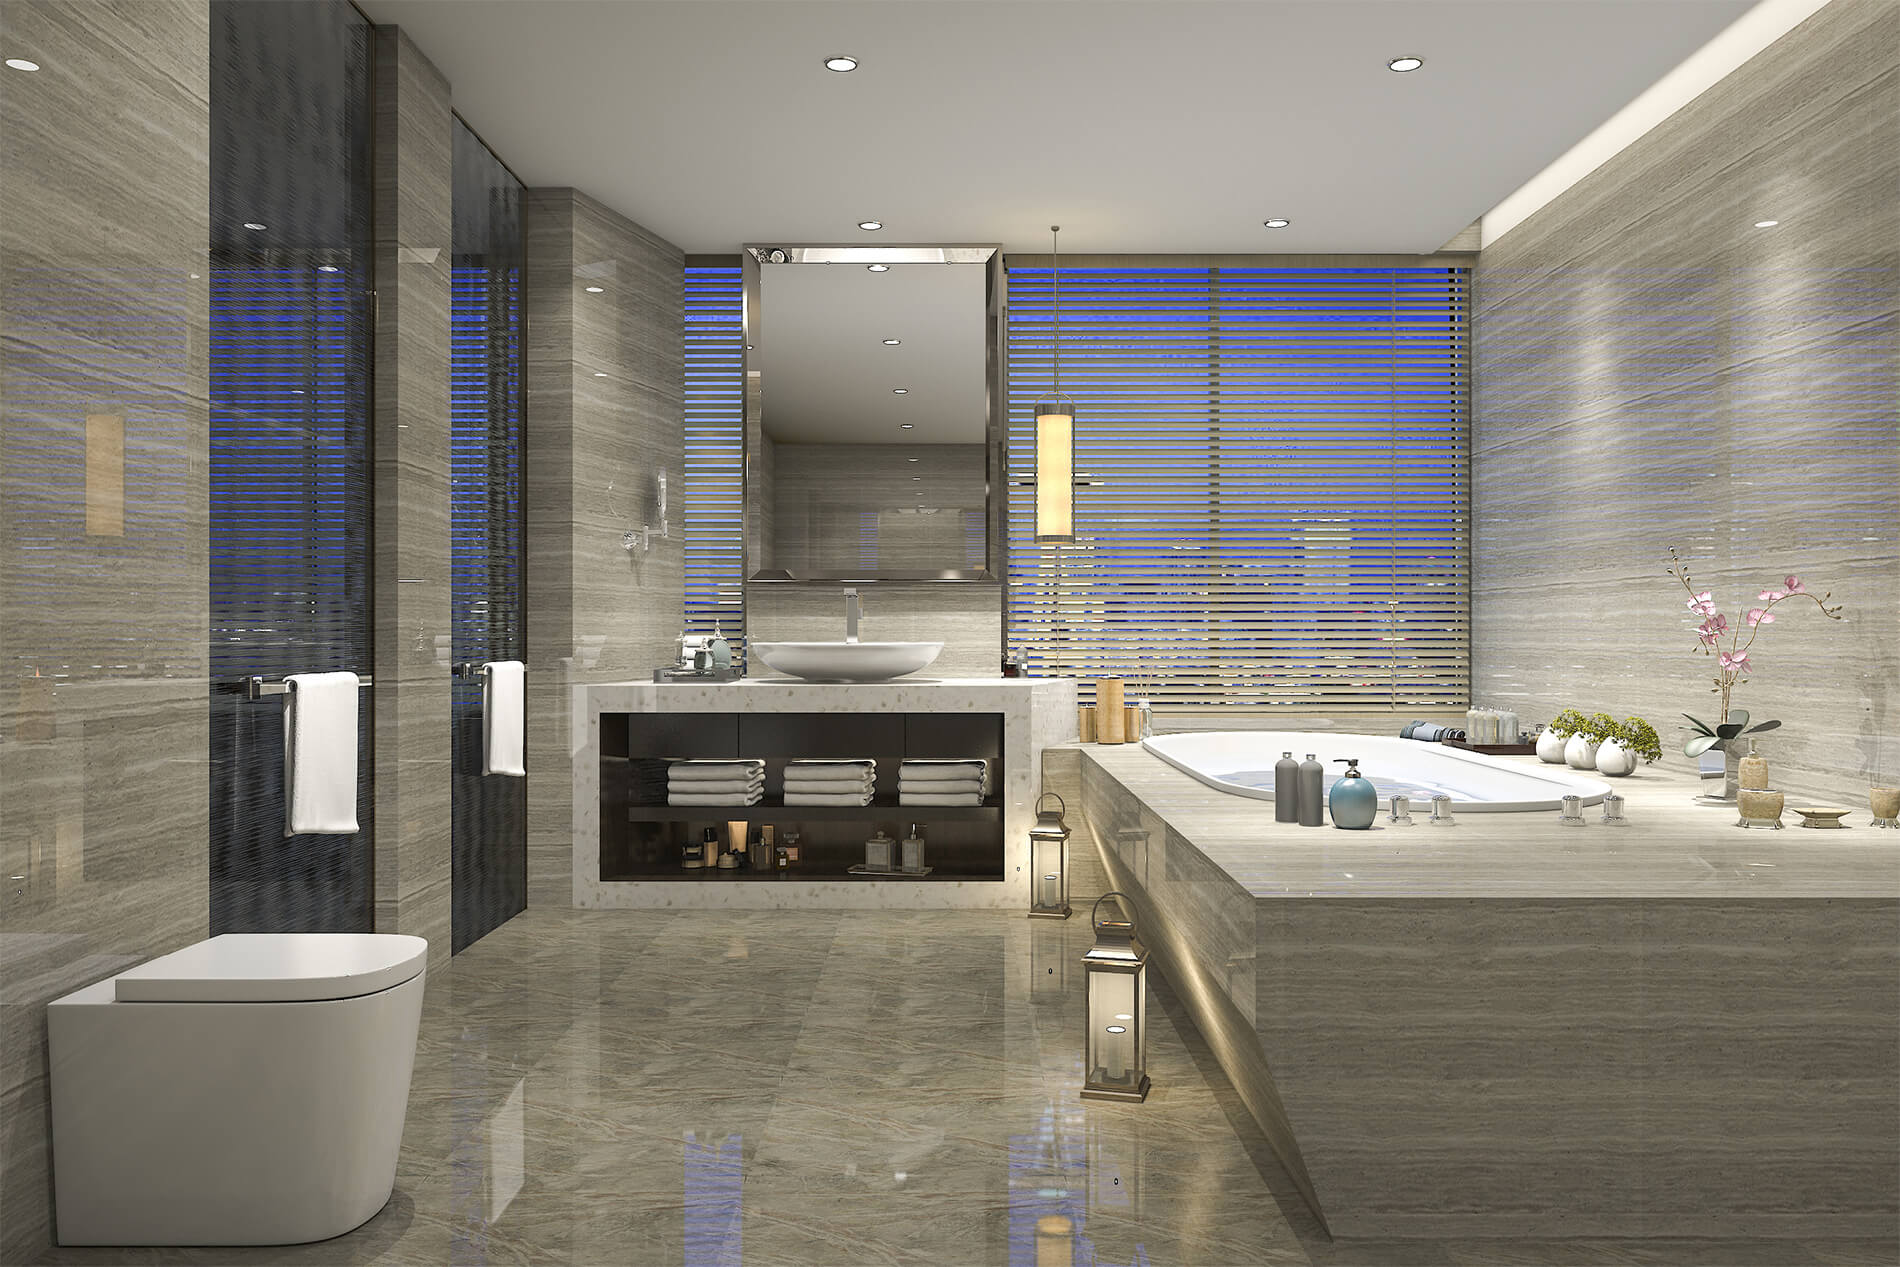 Luxury Bathroom Ideas: 5 Elegant Design Choices for Your Home - High-End  Bathrooms & Kitchens in Shrewsbury